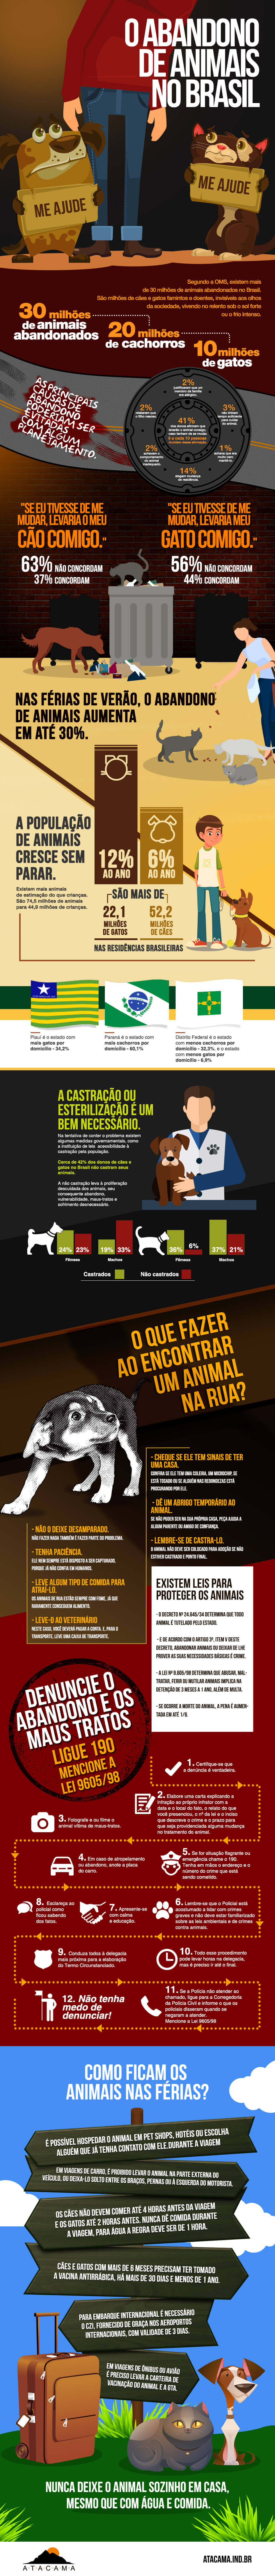  infográfico - abandono de animais no Brasil 